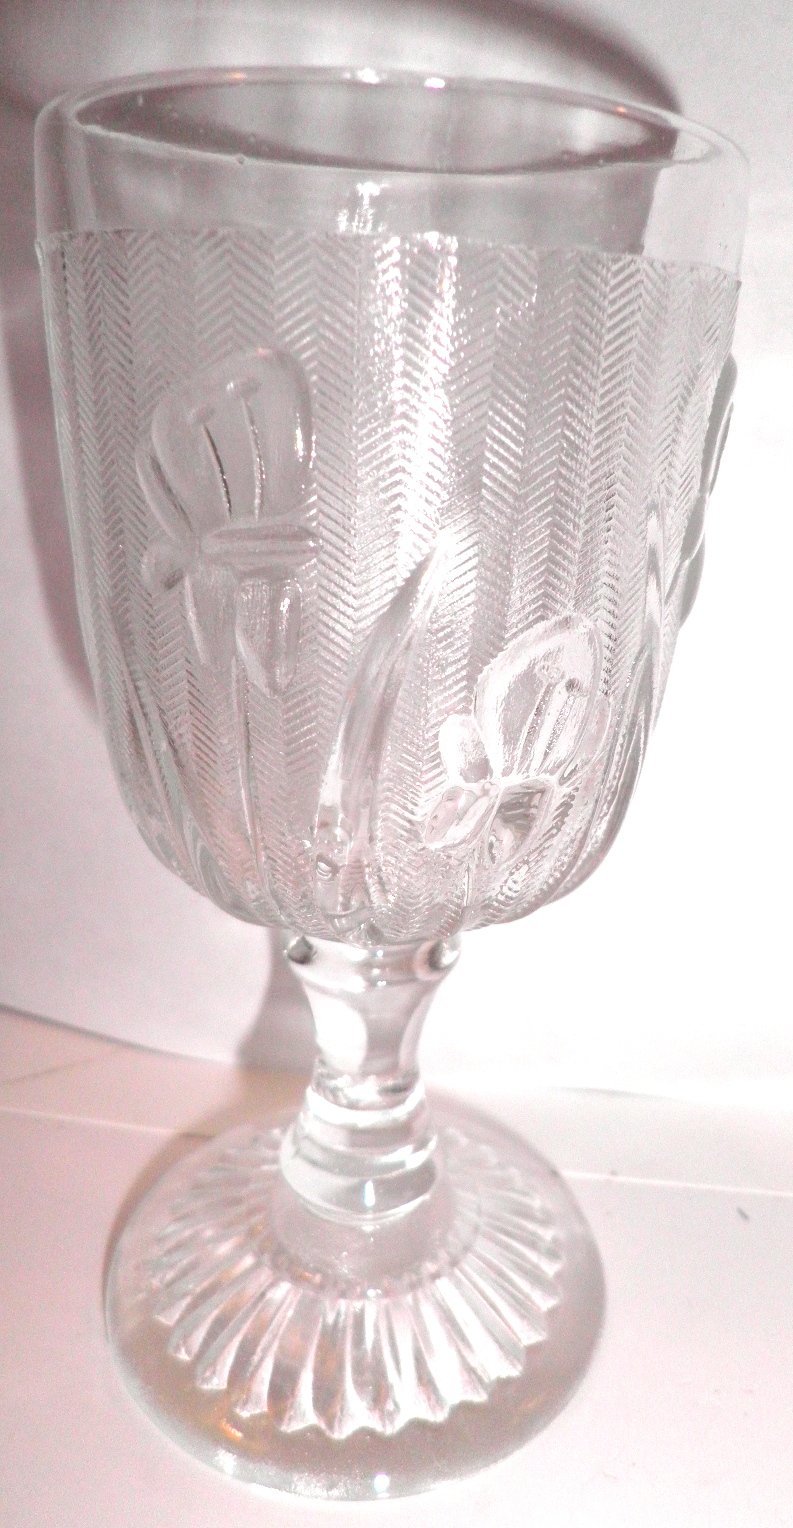 Iris Wine Glass 4.25" - $9.99